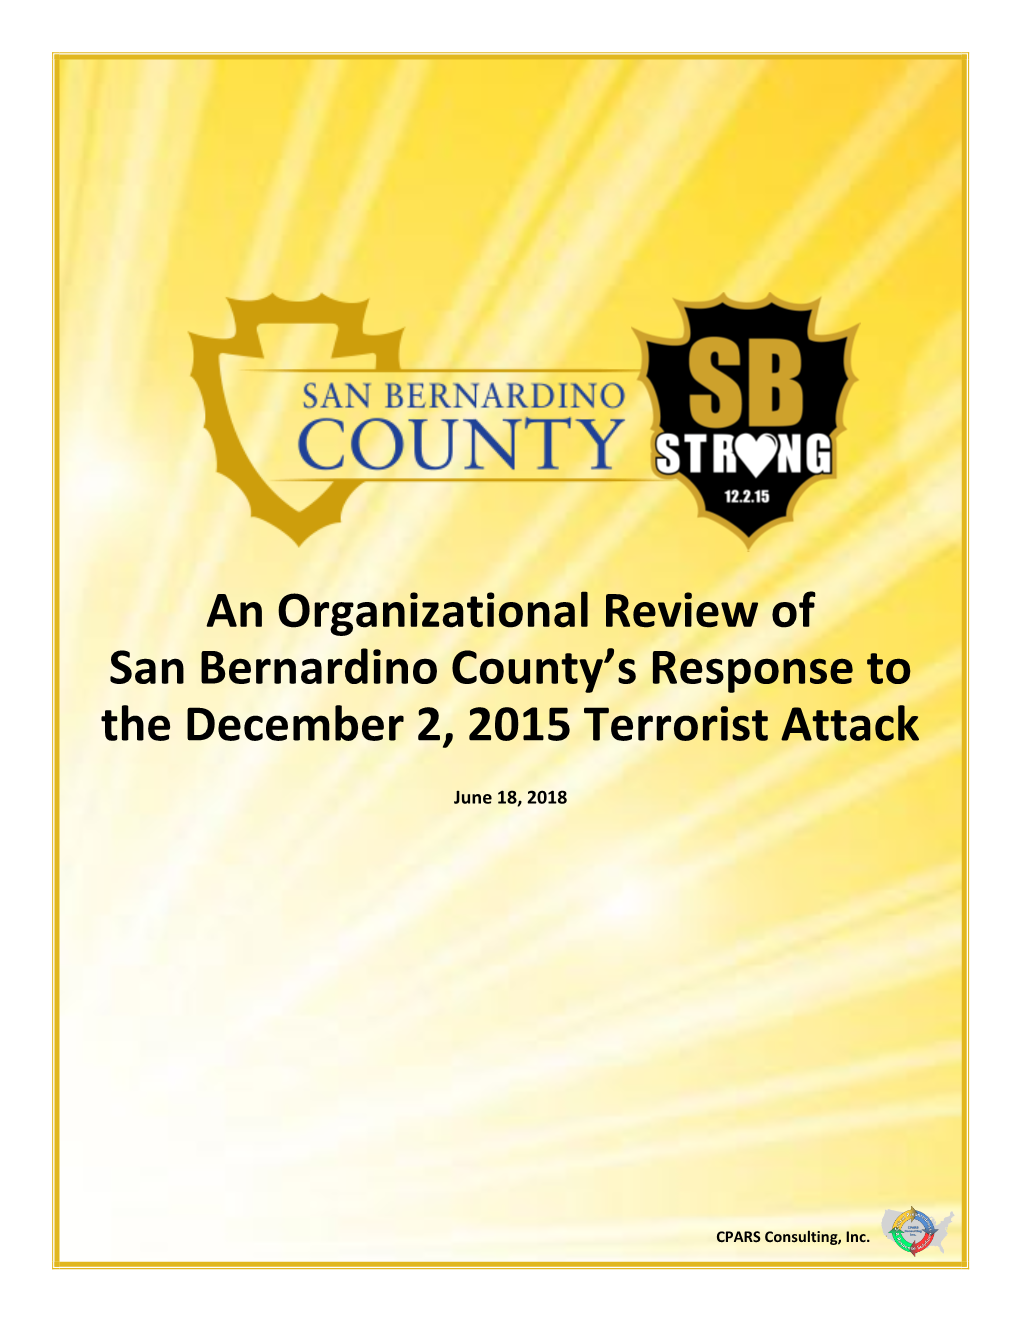 An Organizational Review of San Bernardino County's Response To